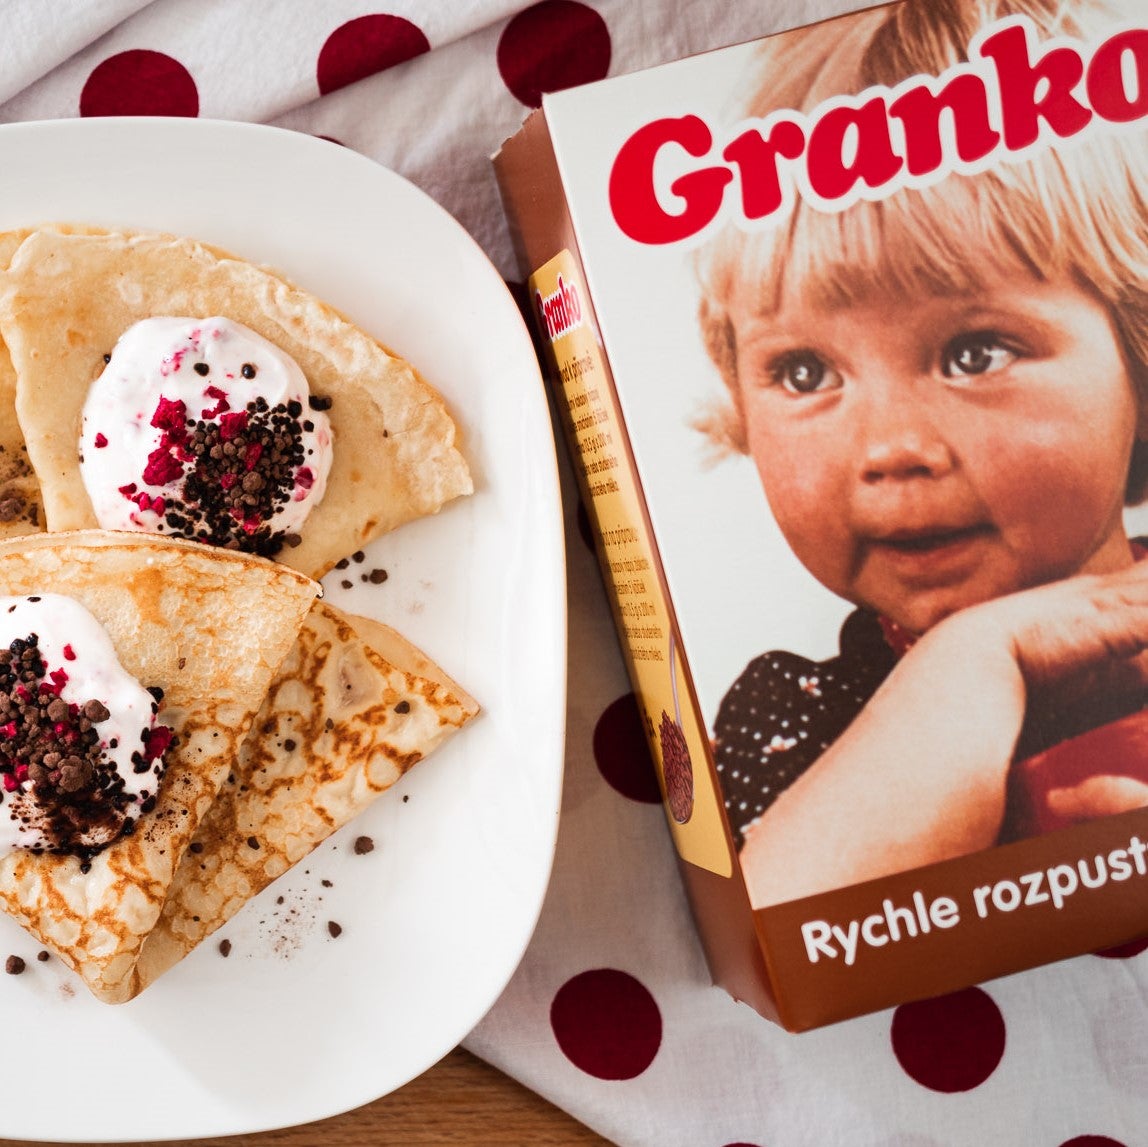 Granko with Pancakes